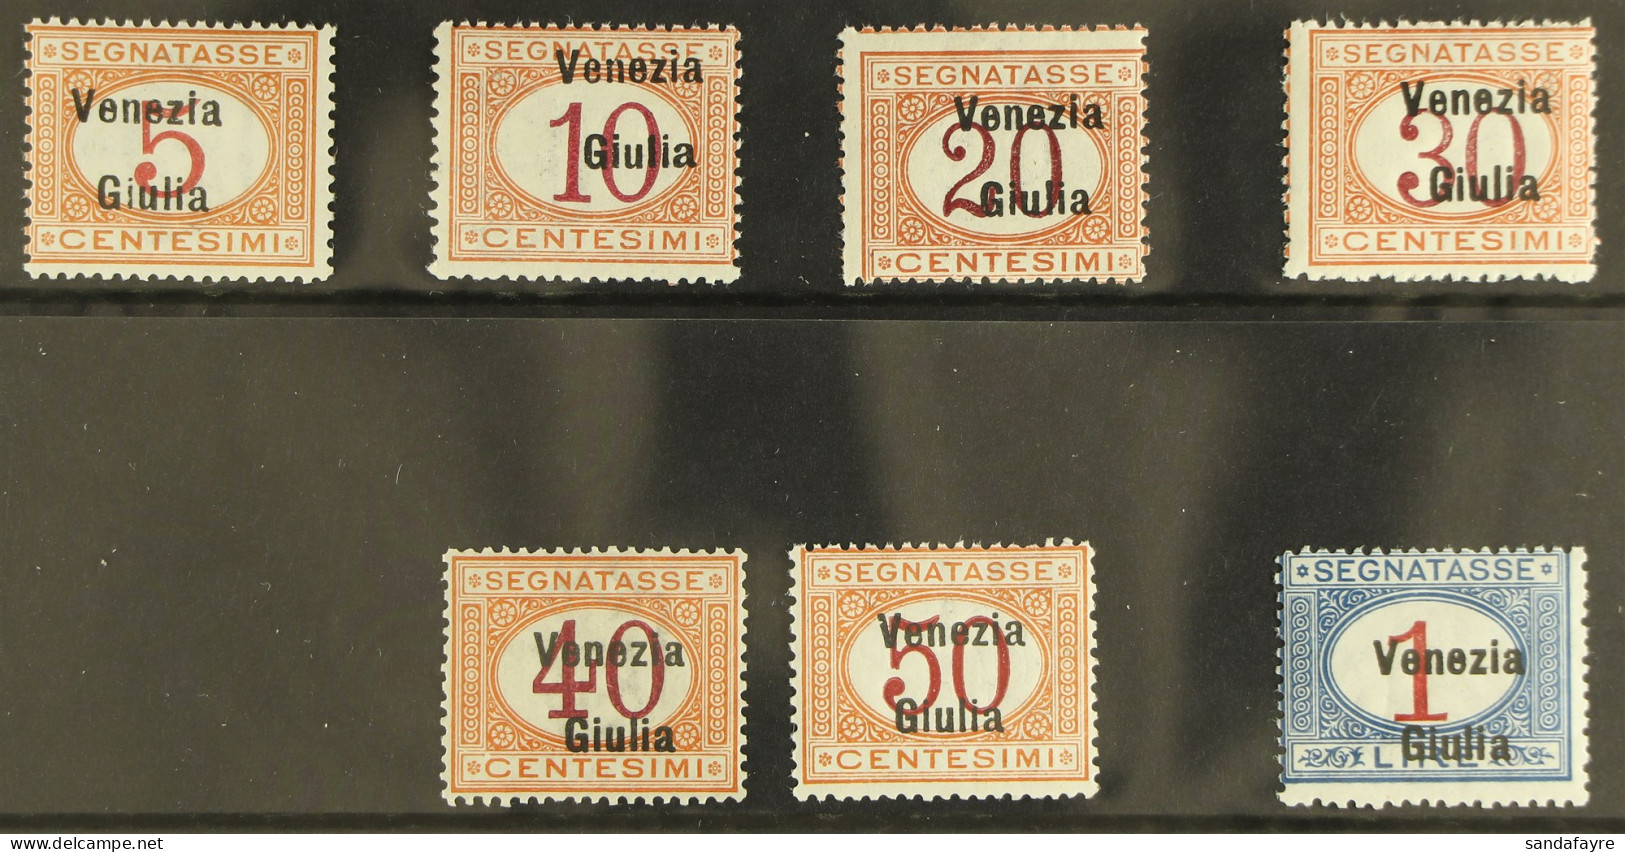 VENEZIA GIULIA Postage Due 1918 Complete Set, Sassone S4, Never Hinged Mint. Cat. ??2500 (7 Stamps) - Zonder Classificatie